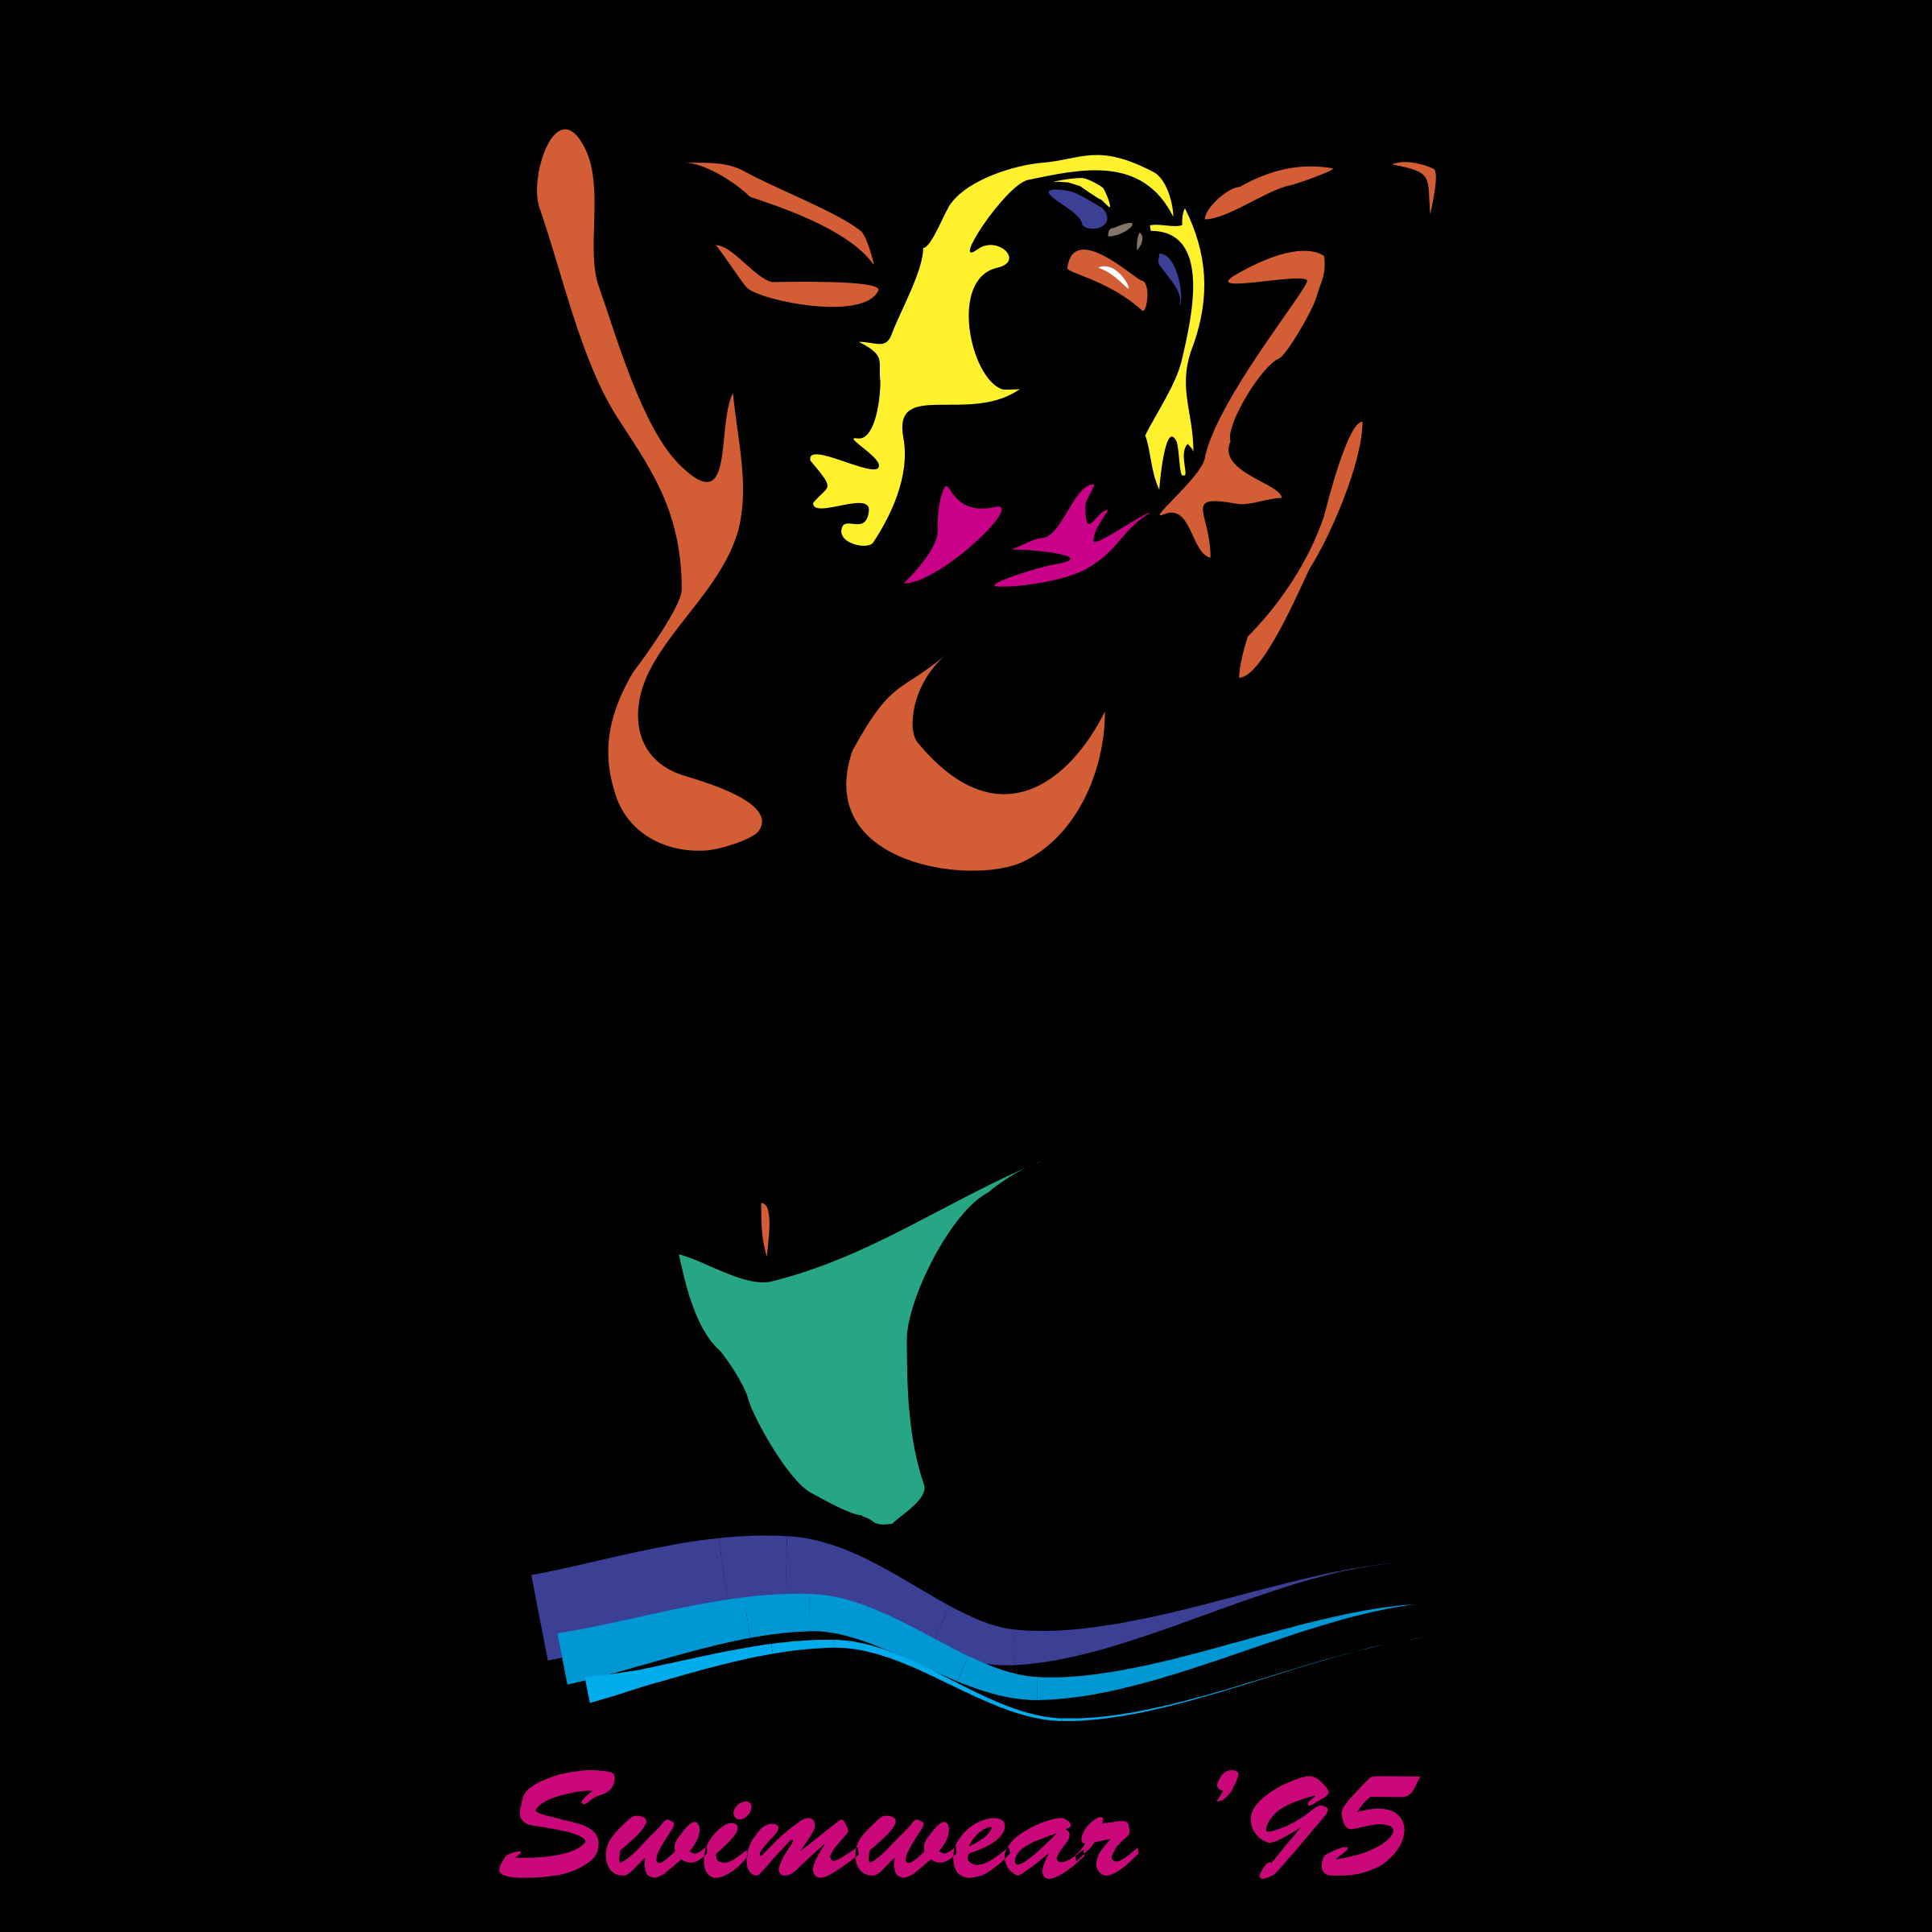 Swimwear Logo - Swimwear 95 Logo PNG Transparent & SVG Vector